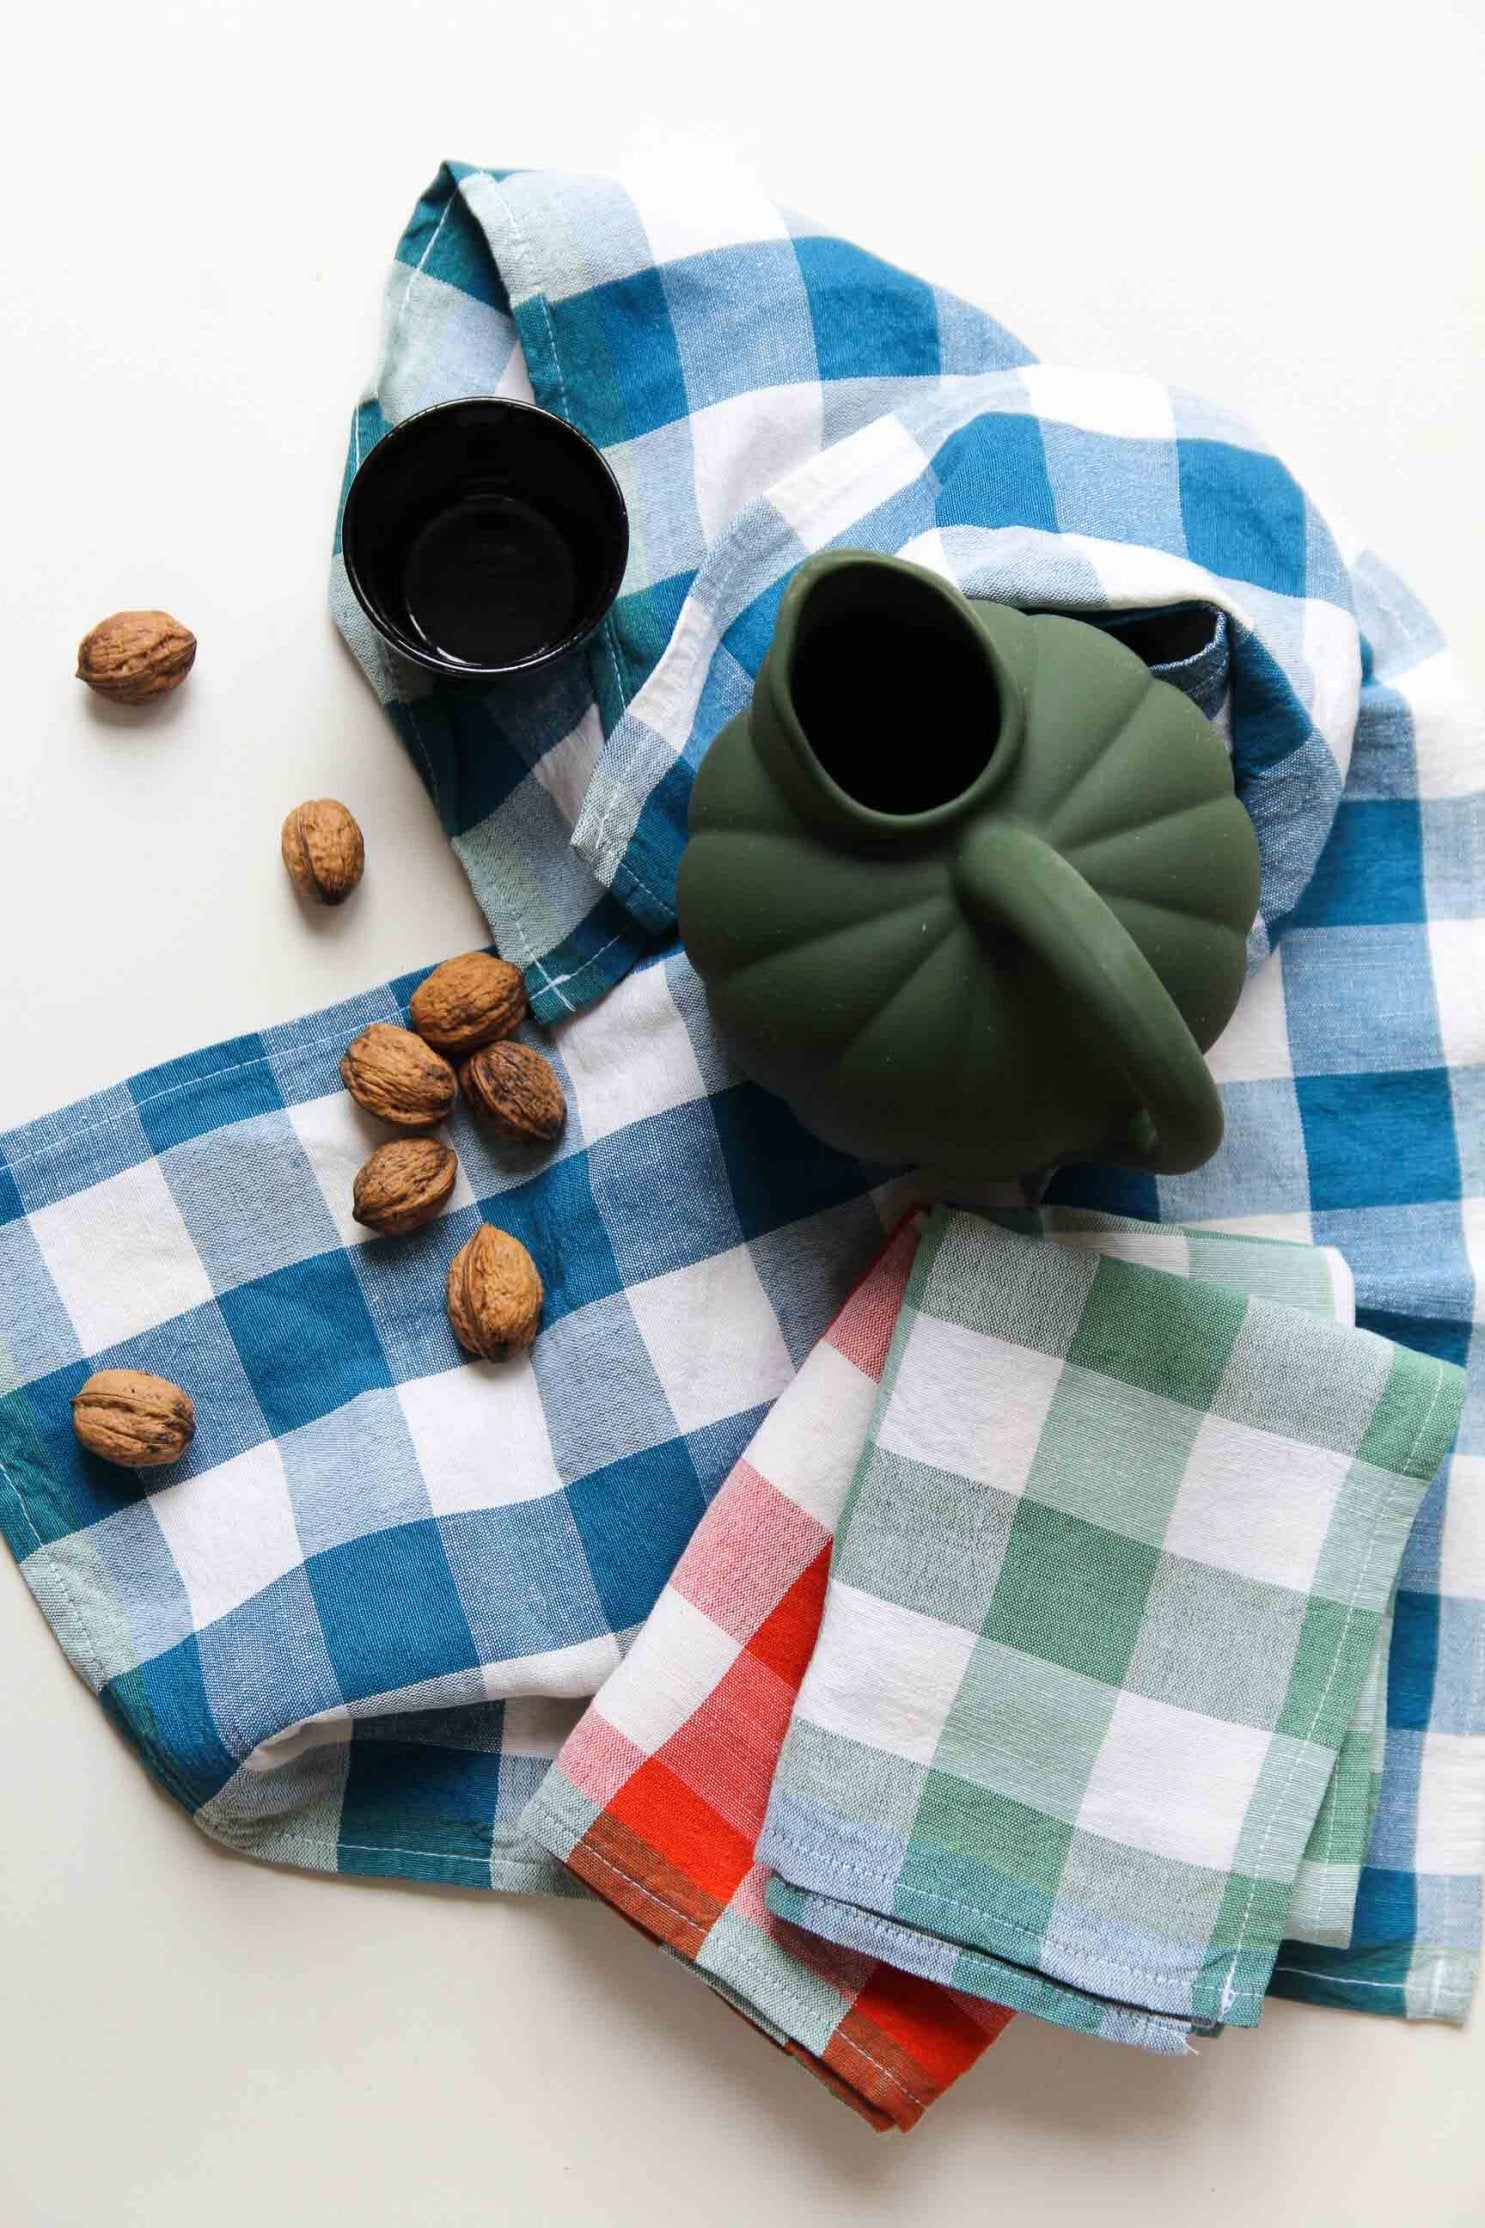 Coucke "Emile Check" (Green), Woven linen & cotton tea towel. Made in France.